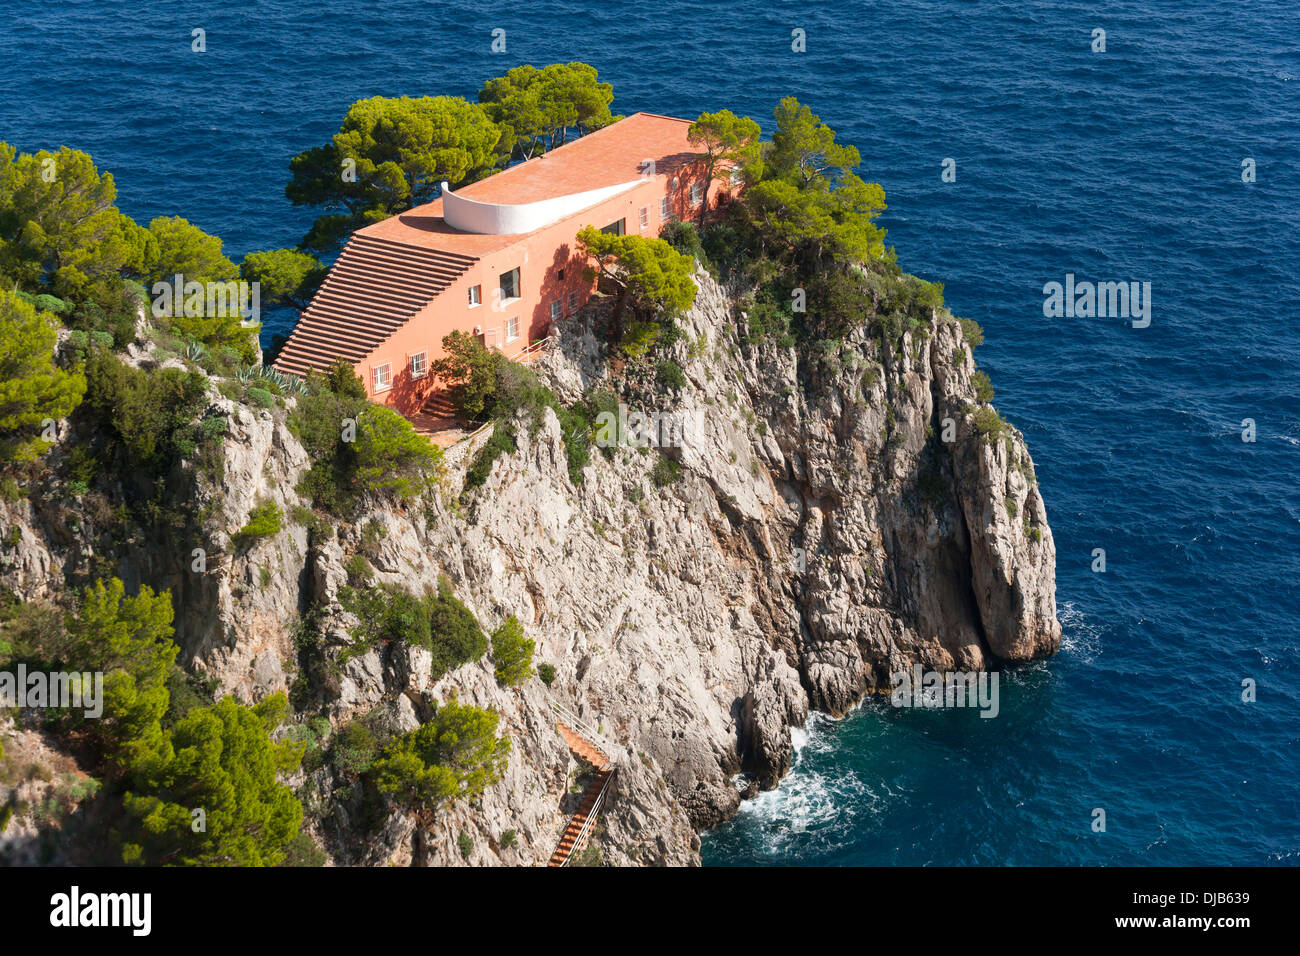 Casa Malaparte set on the Mediterranean coastline, Capri, Campania,Italy, Europe Stock Photo